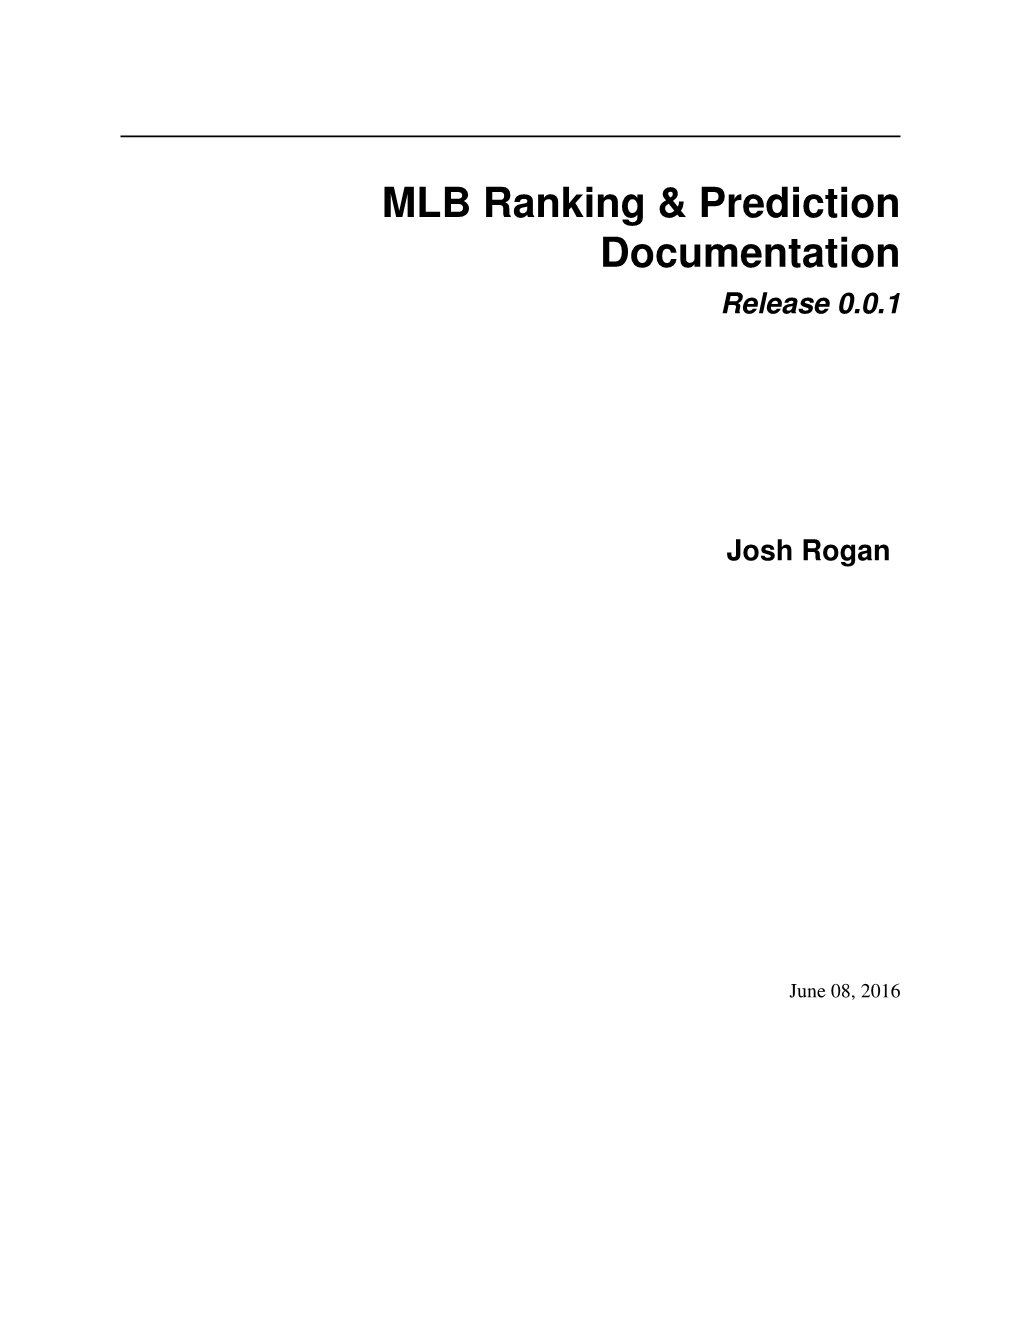 MLB Ranking & Prediction Documentation